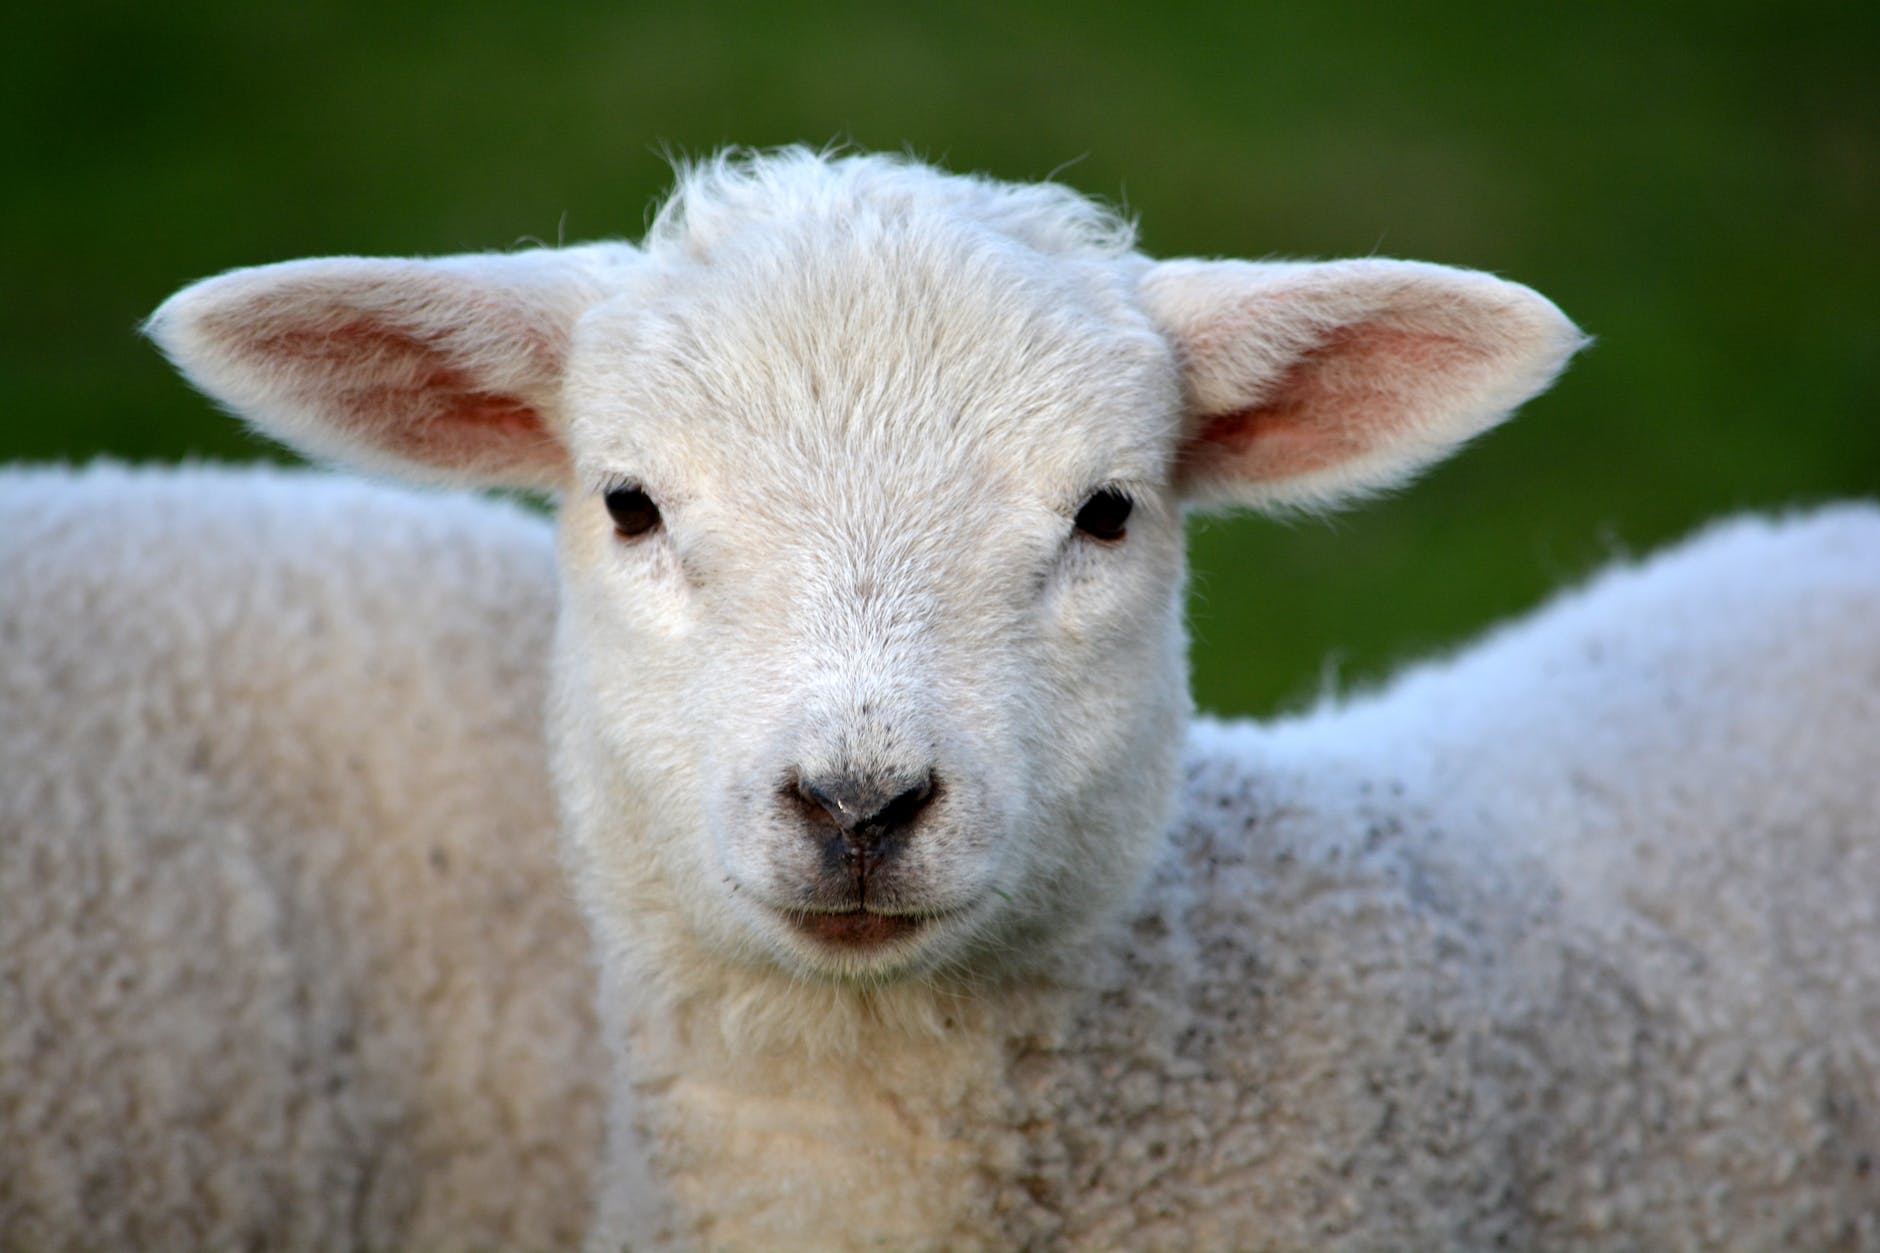 White coated lamb. Nathan told David a parable about a lamb.